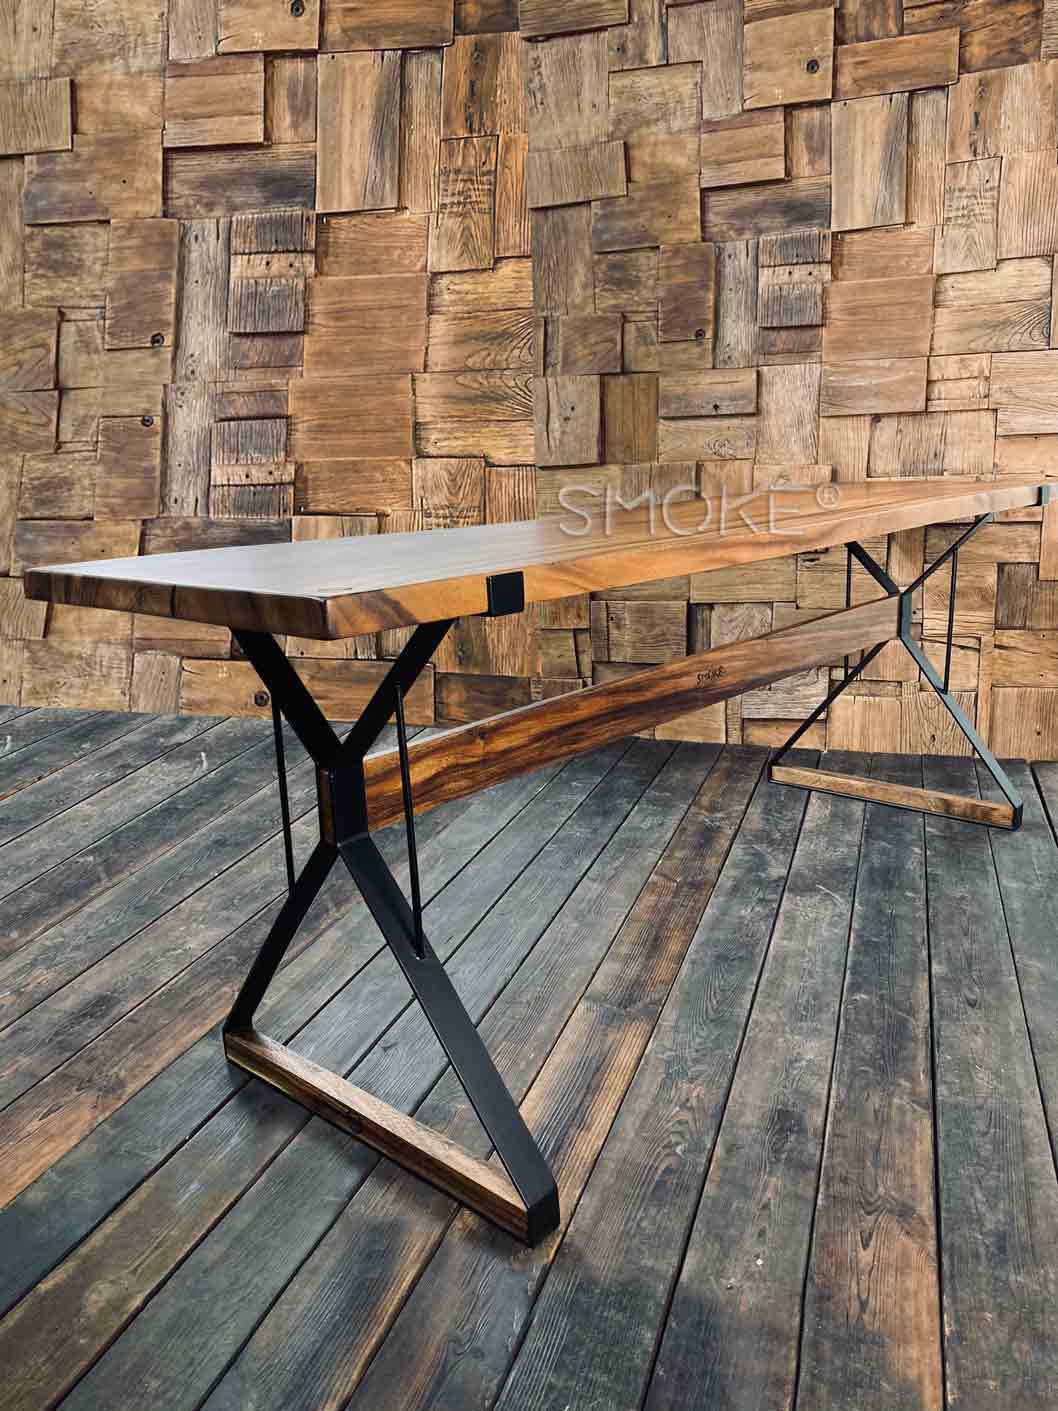 suar wood table